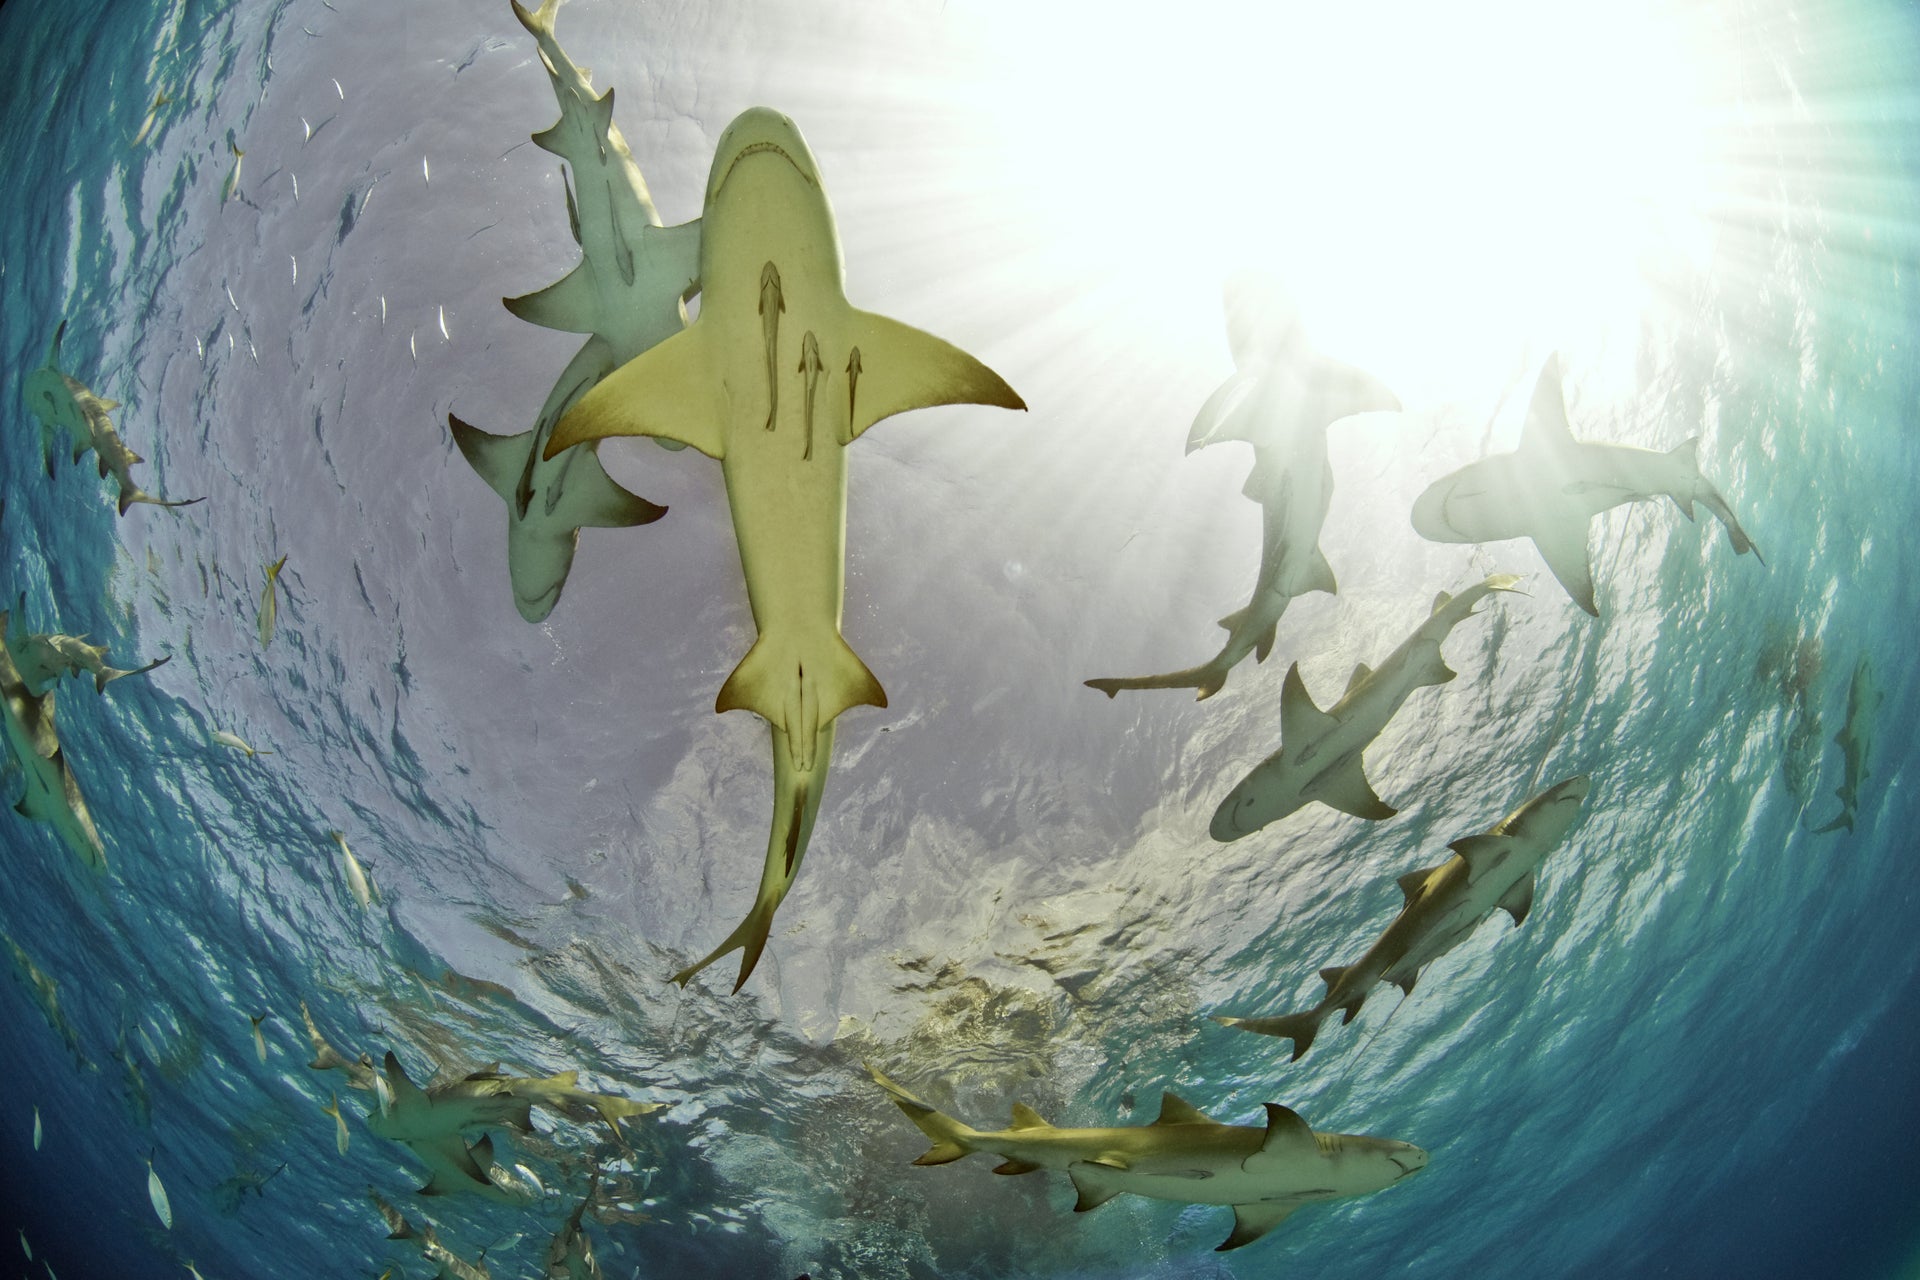 Meet the Lemon Sharks of Sal Island